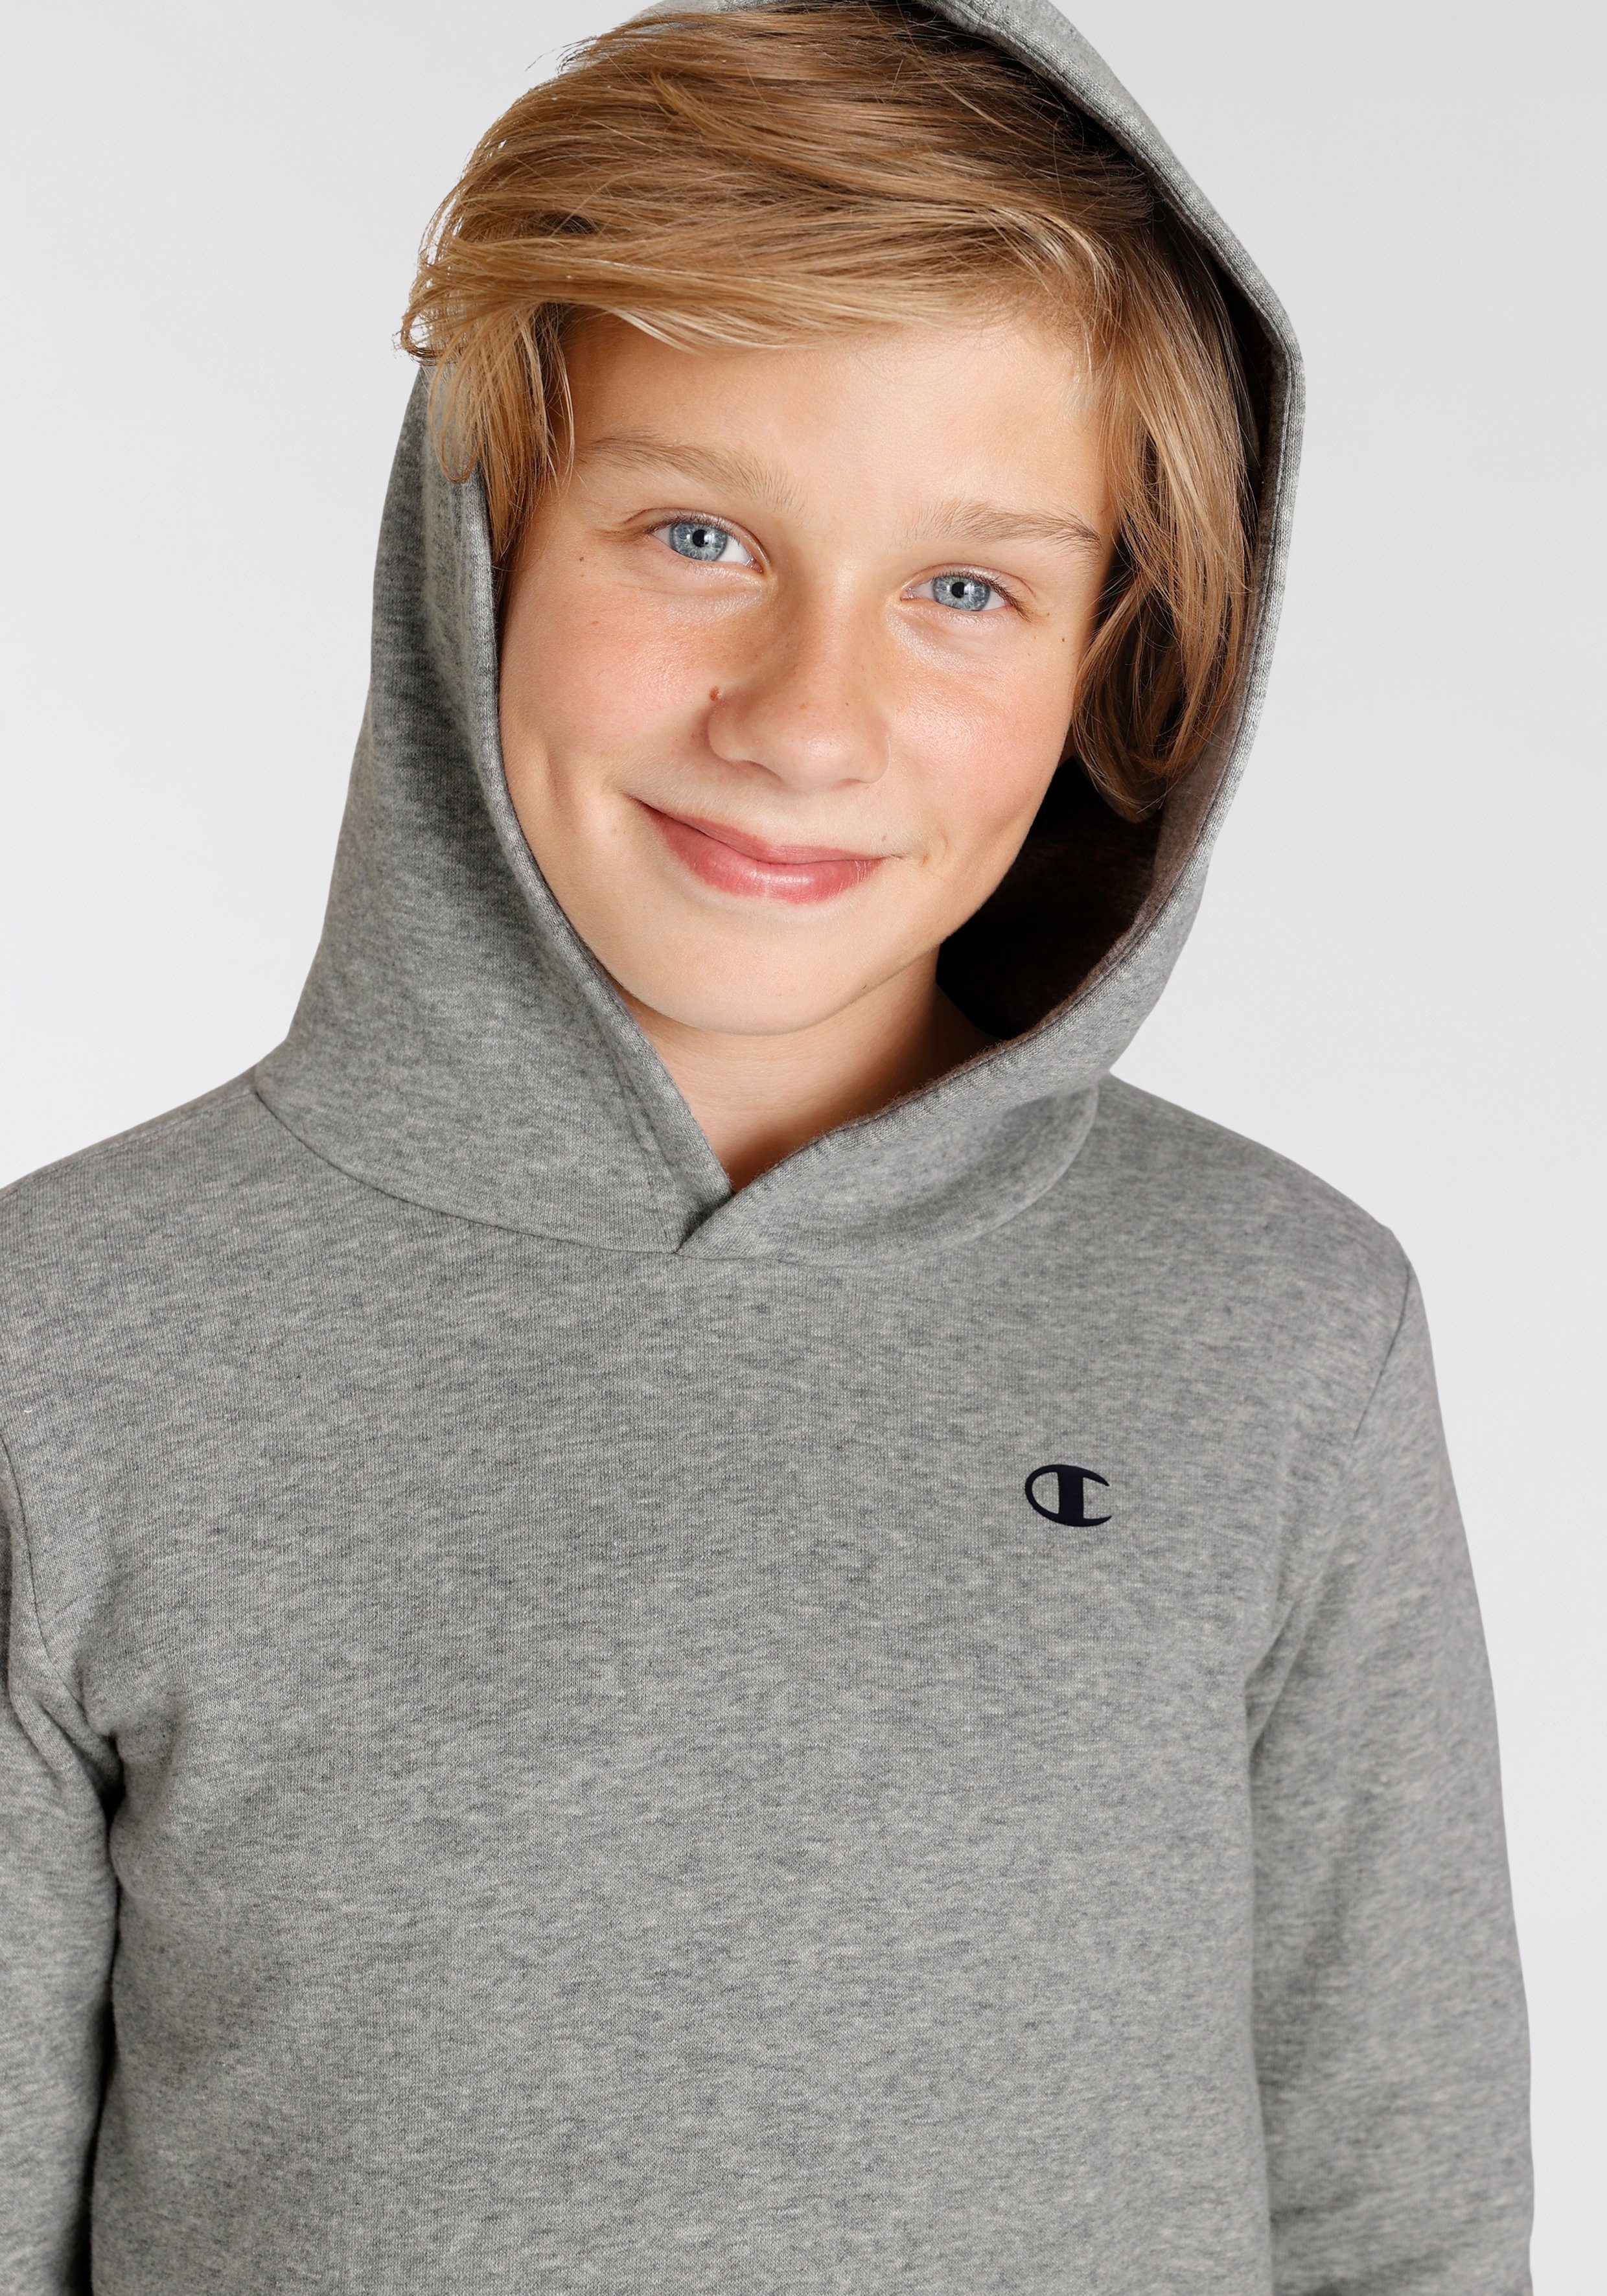 Basic Kinder grau für - Sweatshirt Champion Hooded Sweatshirt